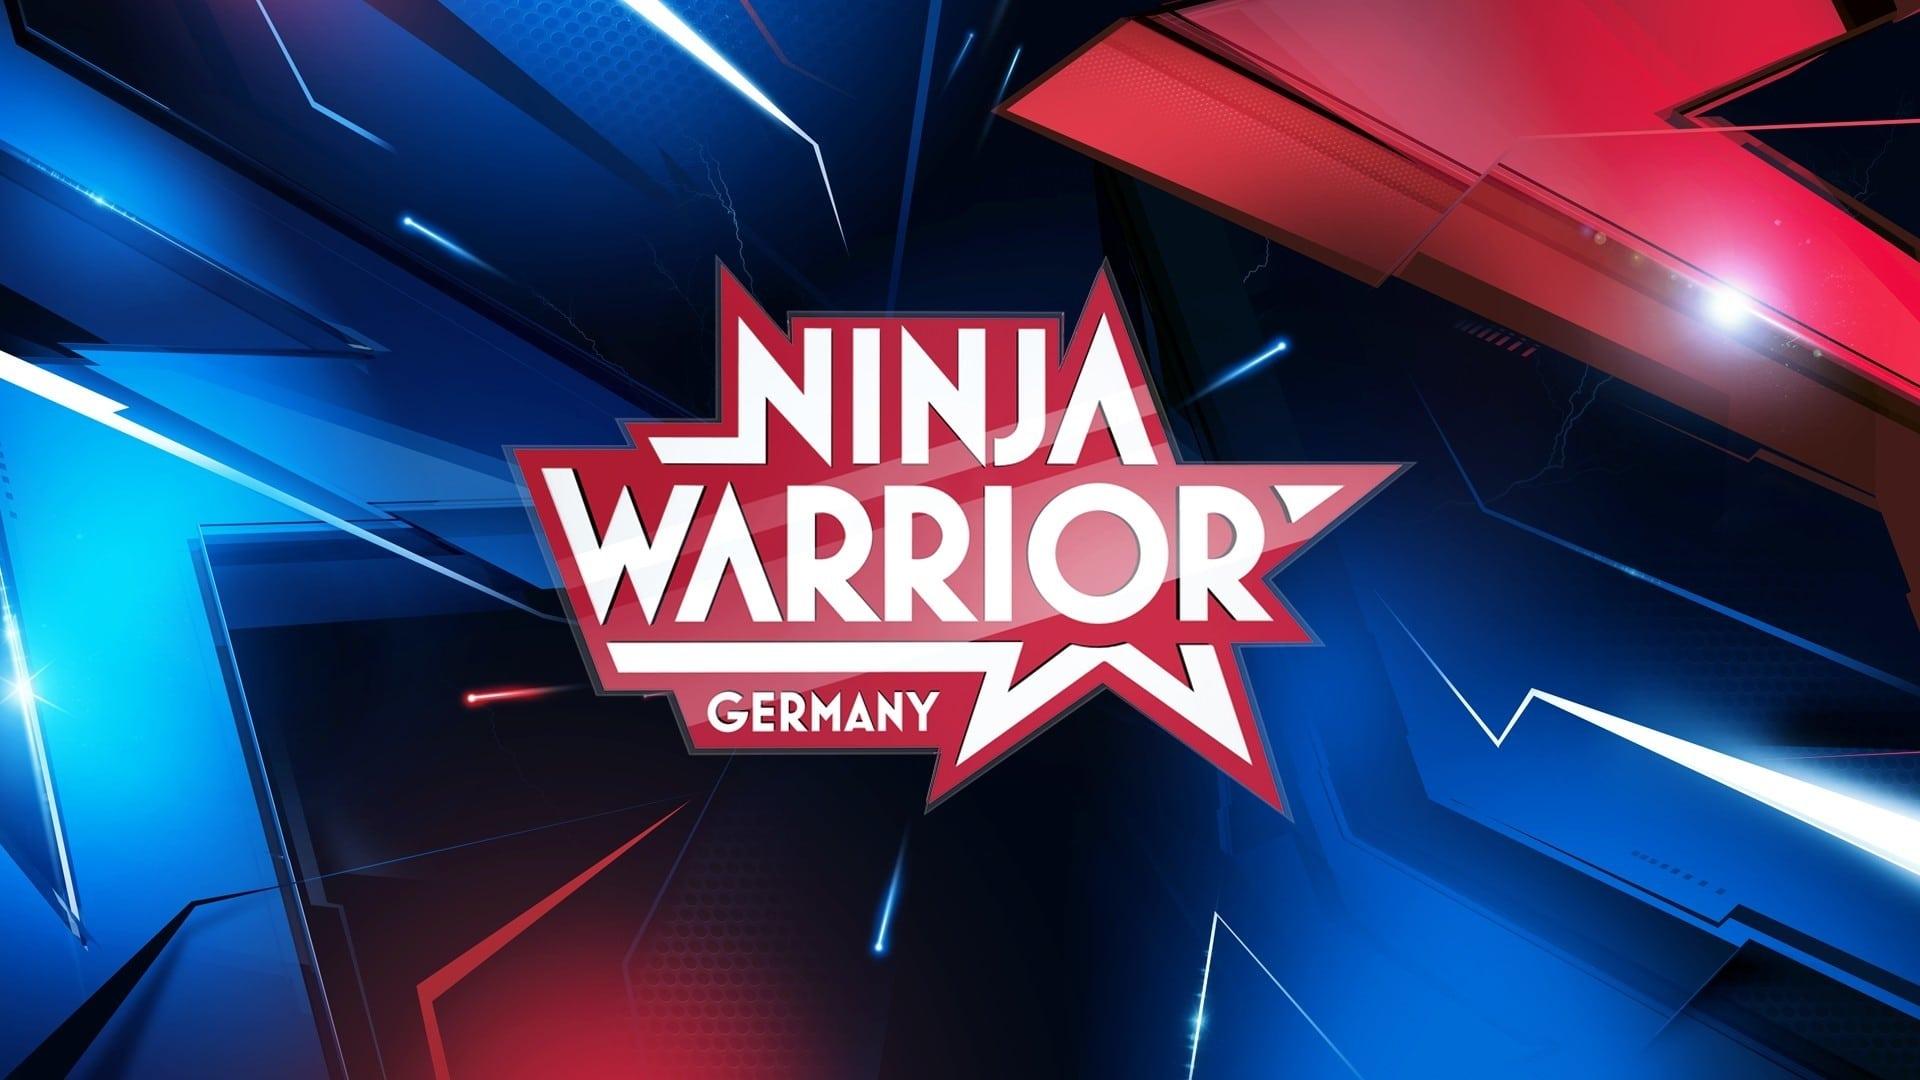 Ninja Warrior Germany backdrop